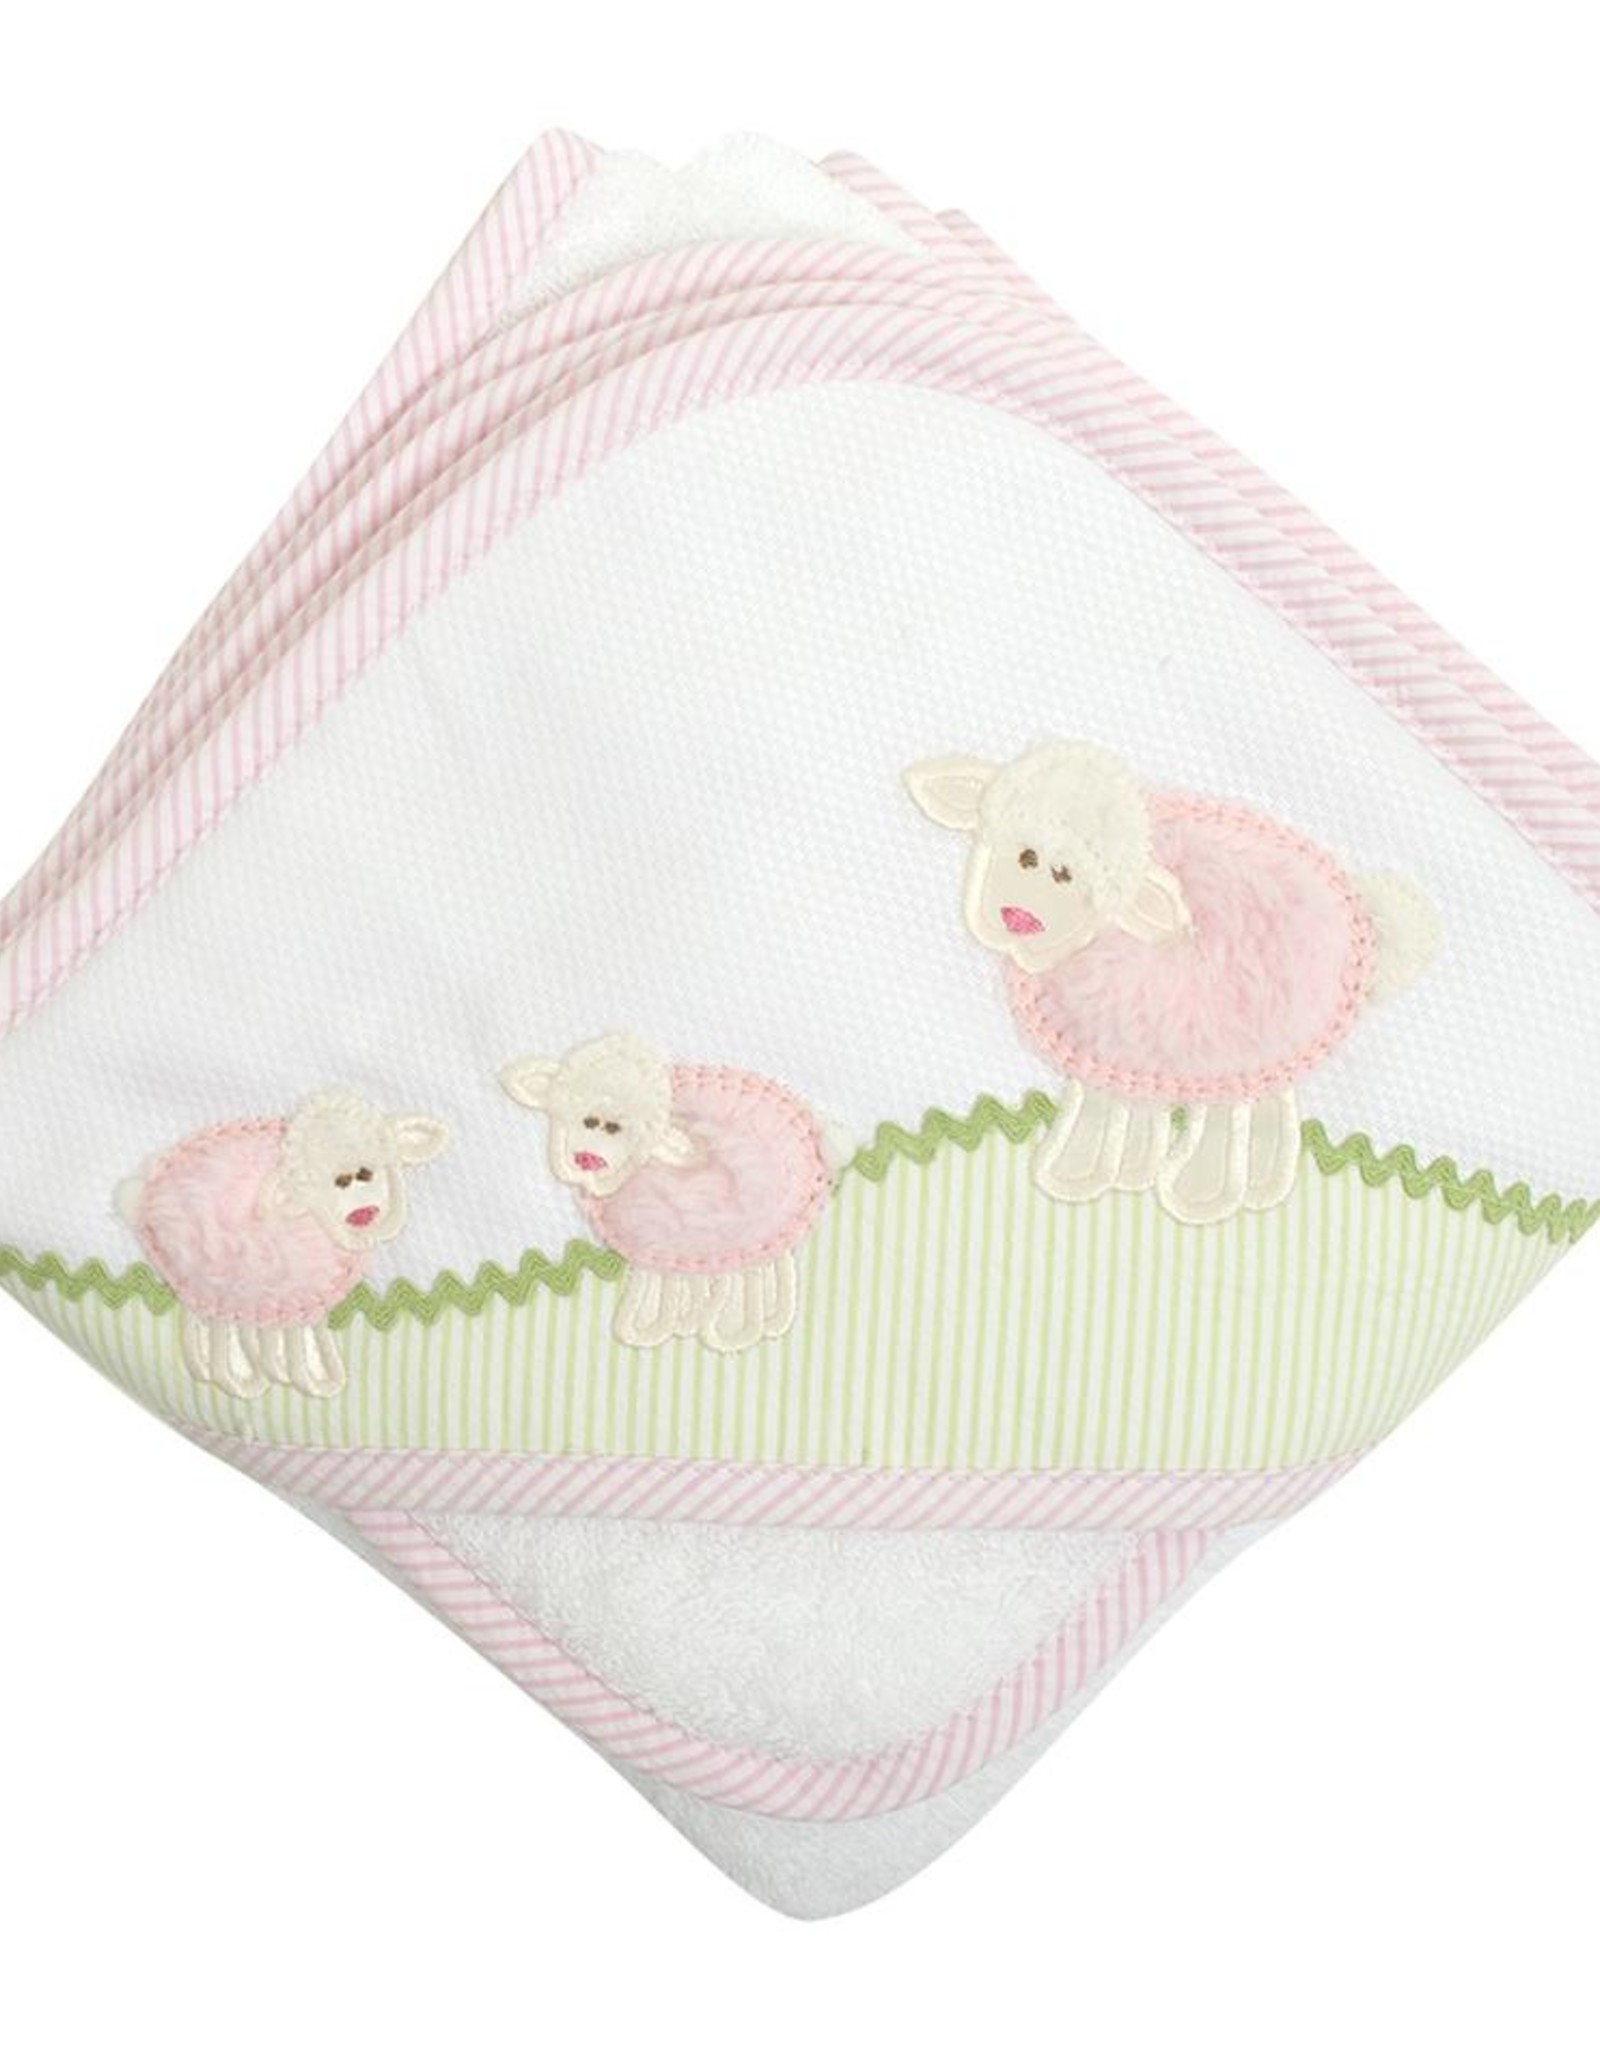 3 Marthas 3M Boxed Hooded Towel Set Pink Lamb